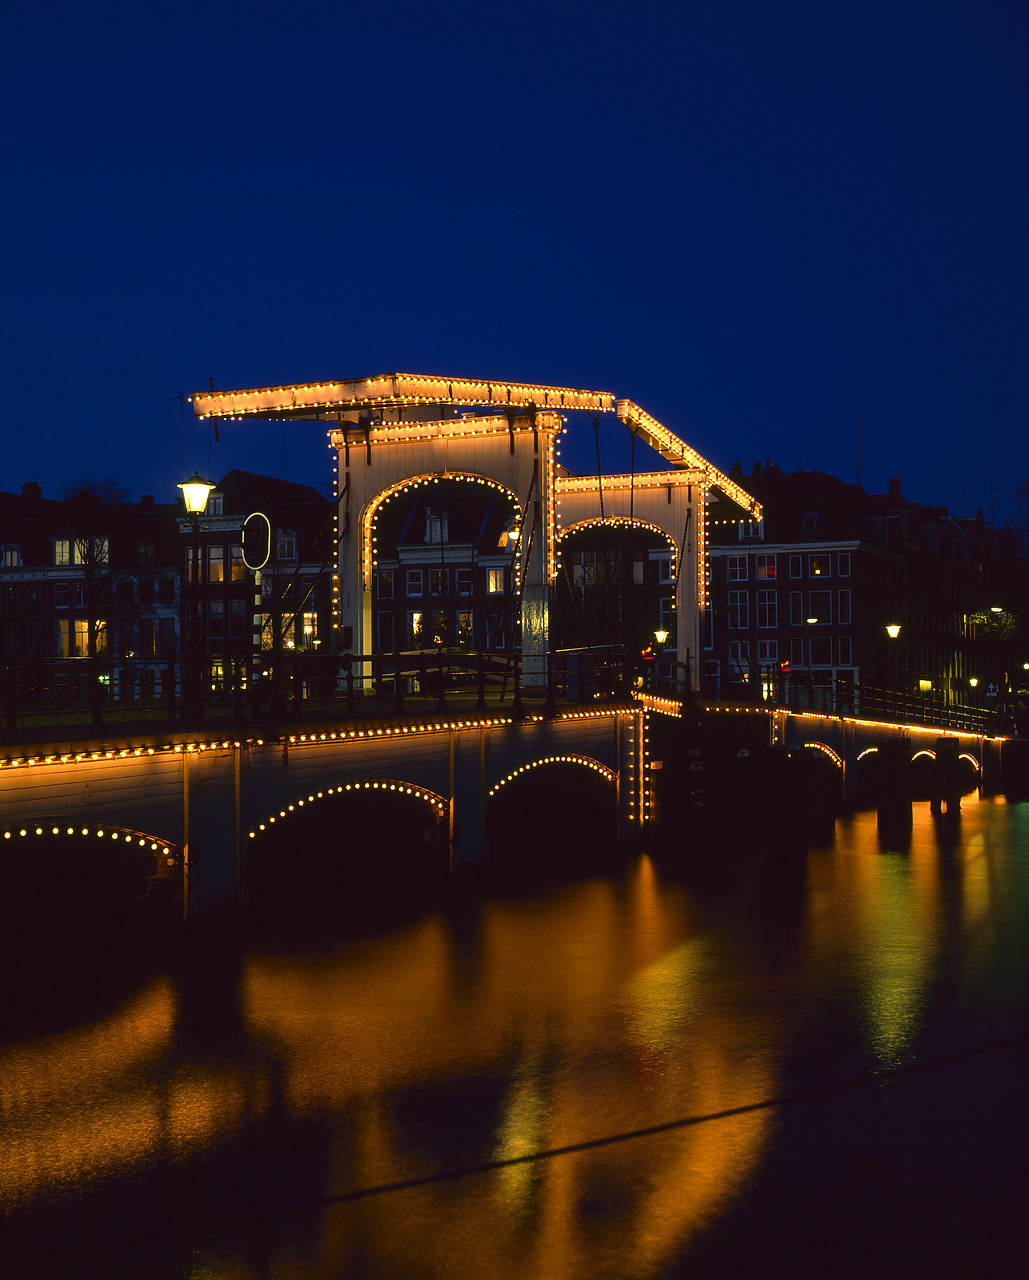 #892039-3 - Magere Brug (Skinny Bridge) at Night, Amsterdam, Holland